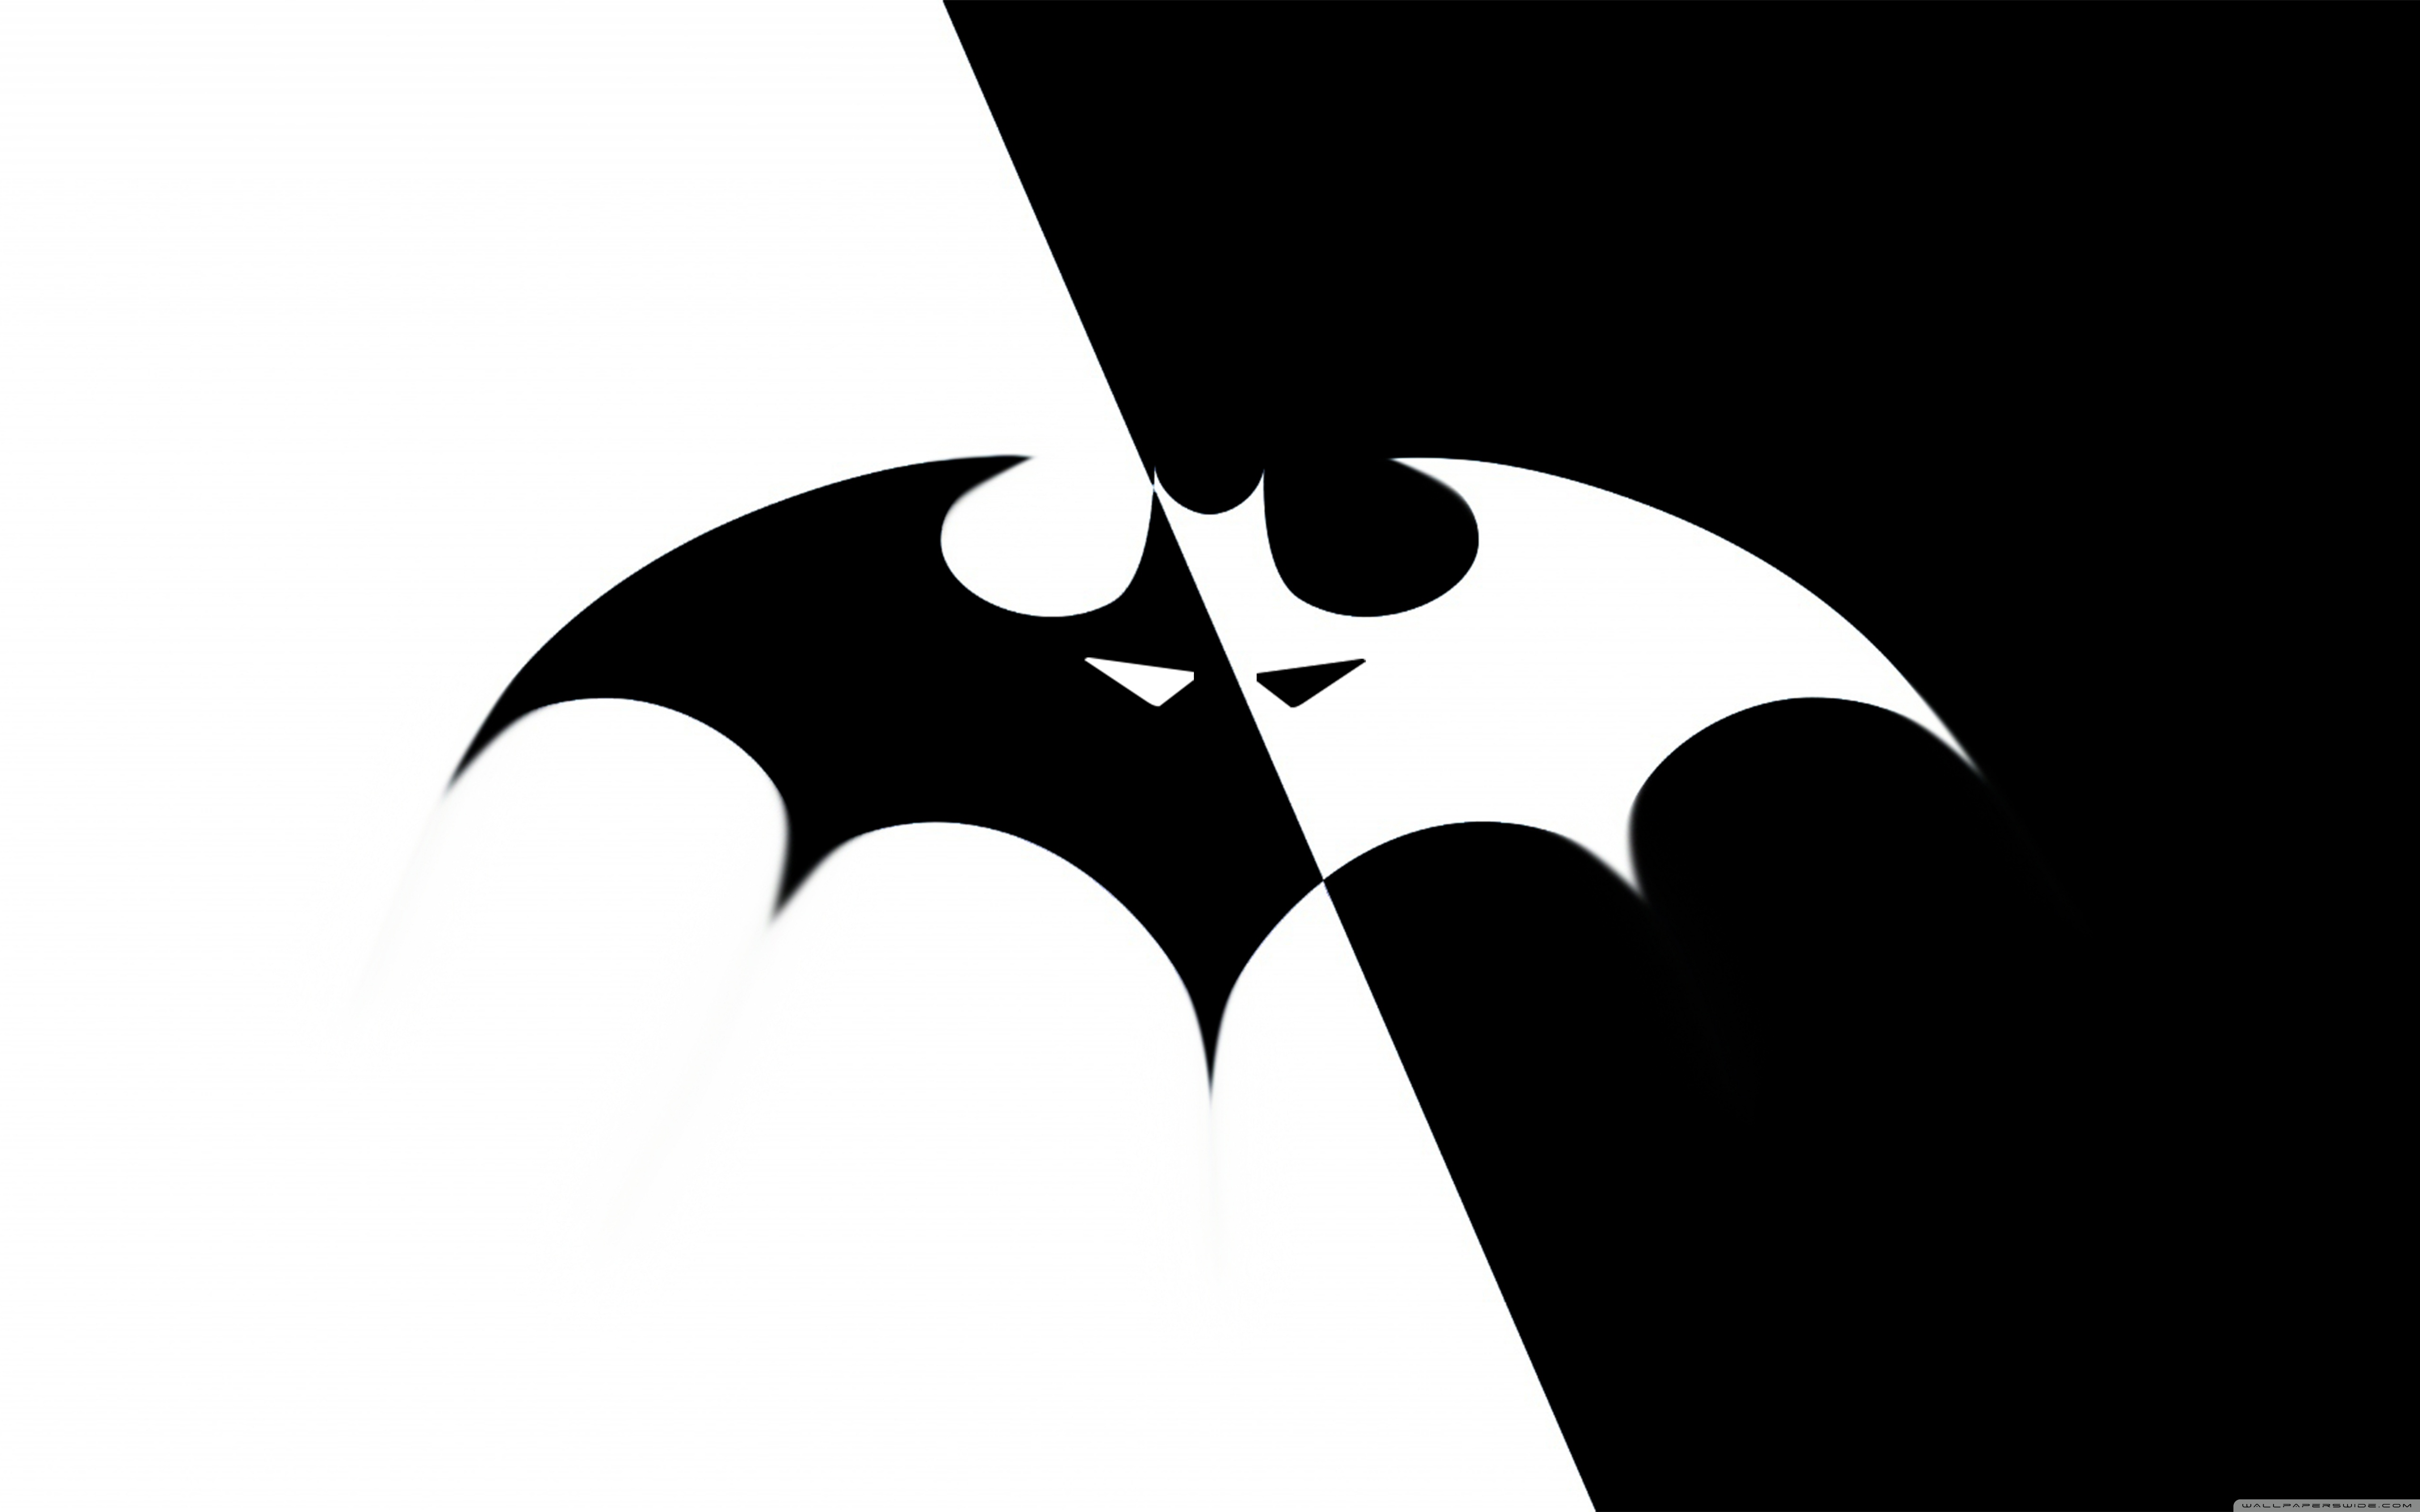 Black And White Logo Batman - ClipArt Best